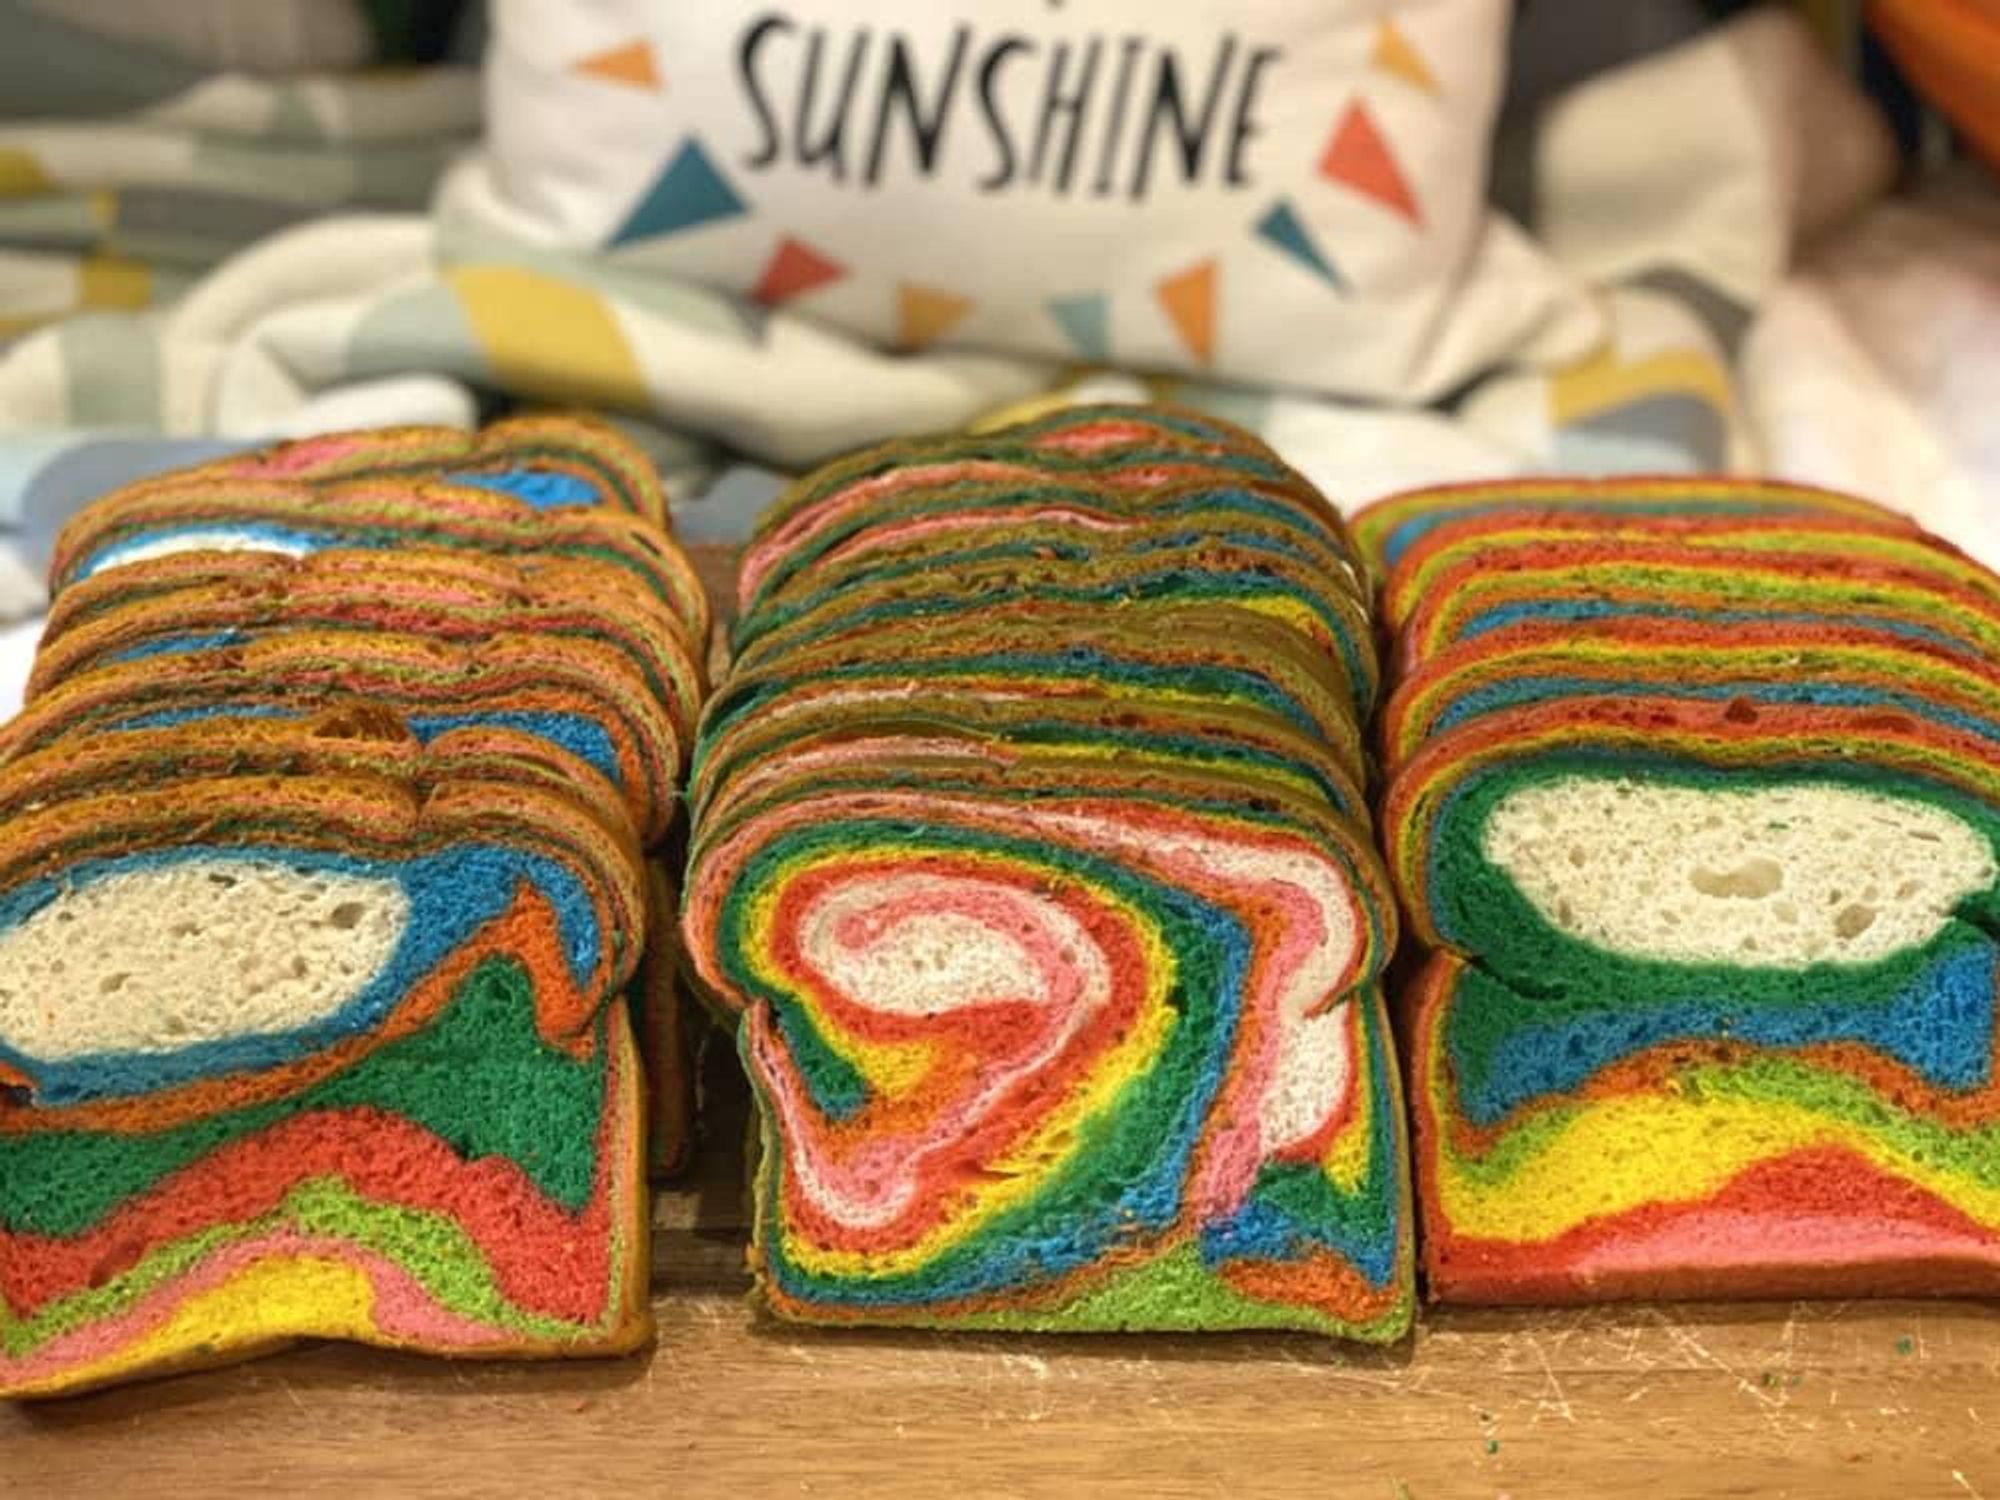 Signature Baking rainbow bread